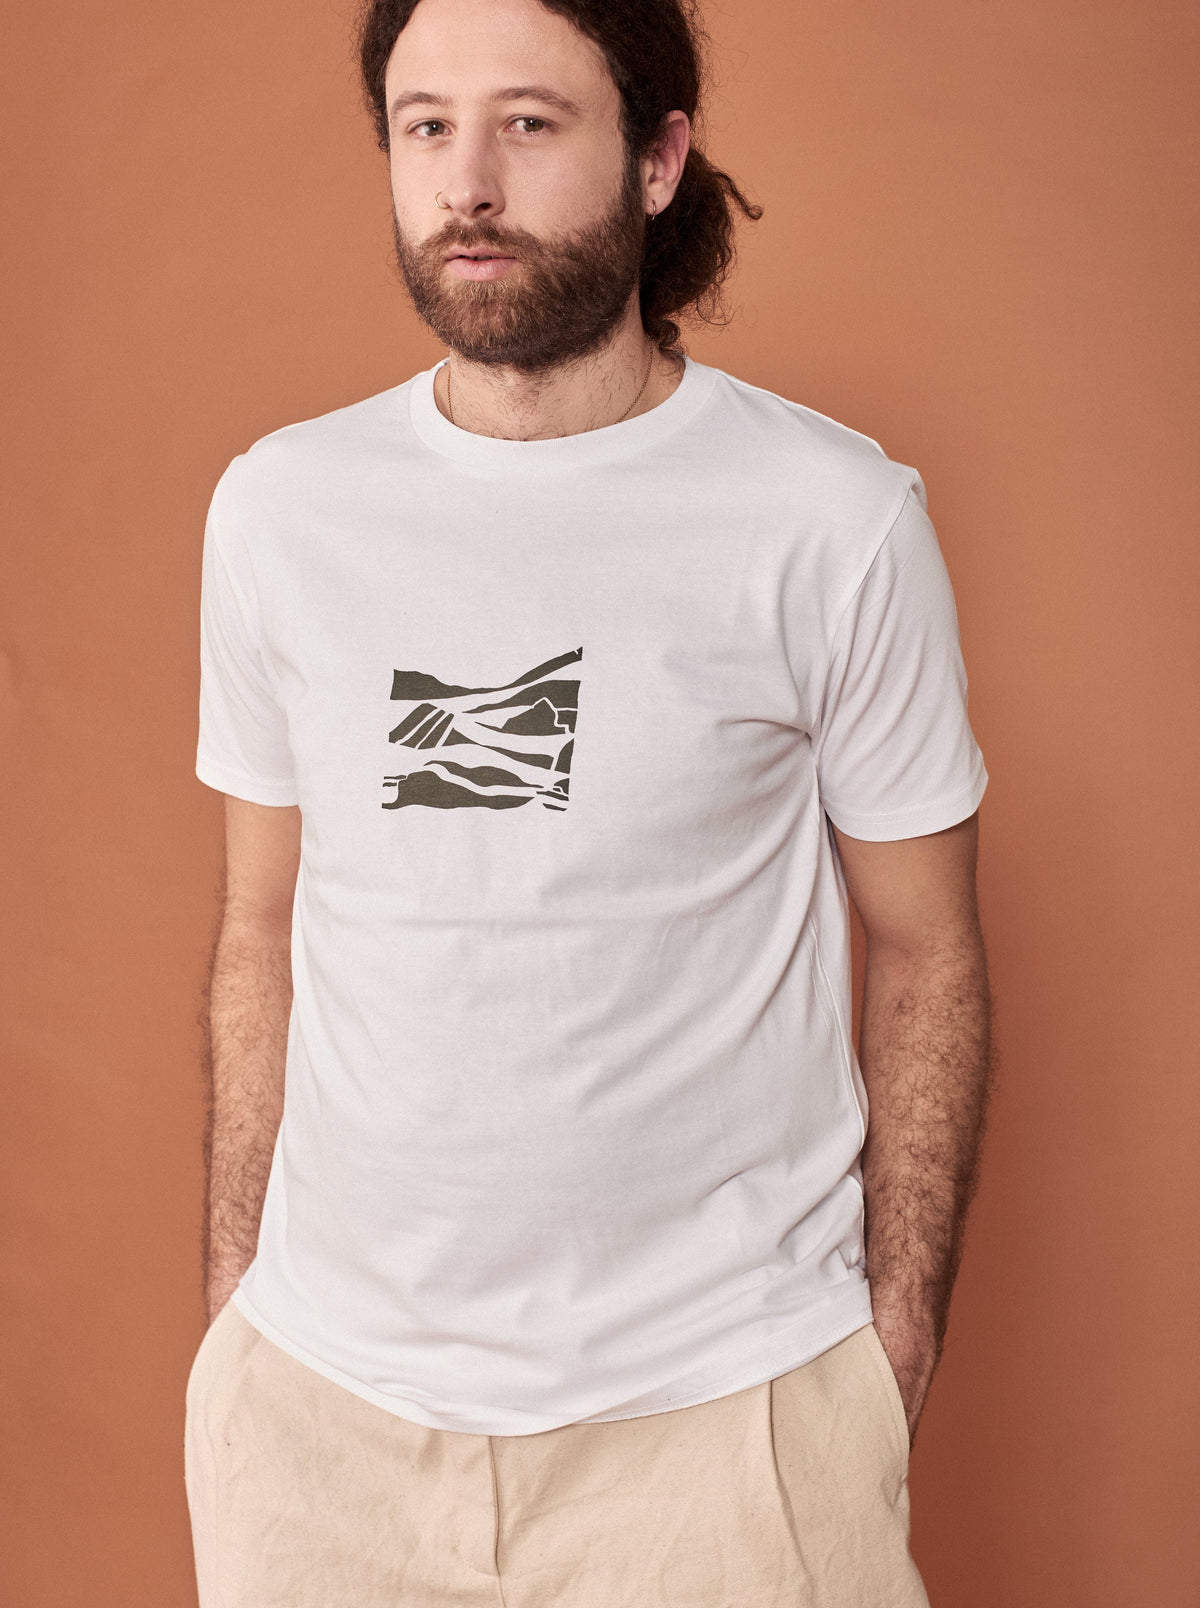 Balaton-felvidék white unisex t-shirt